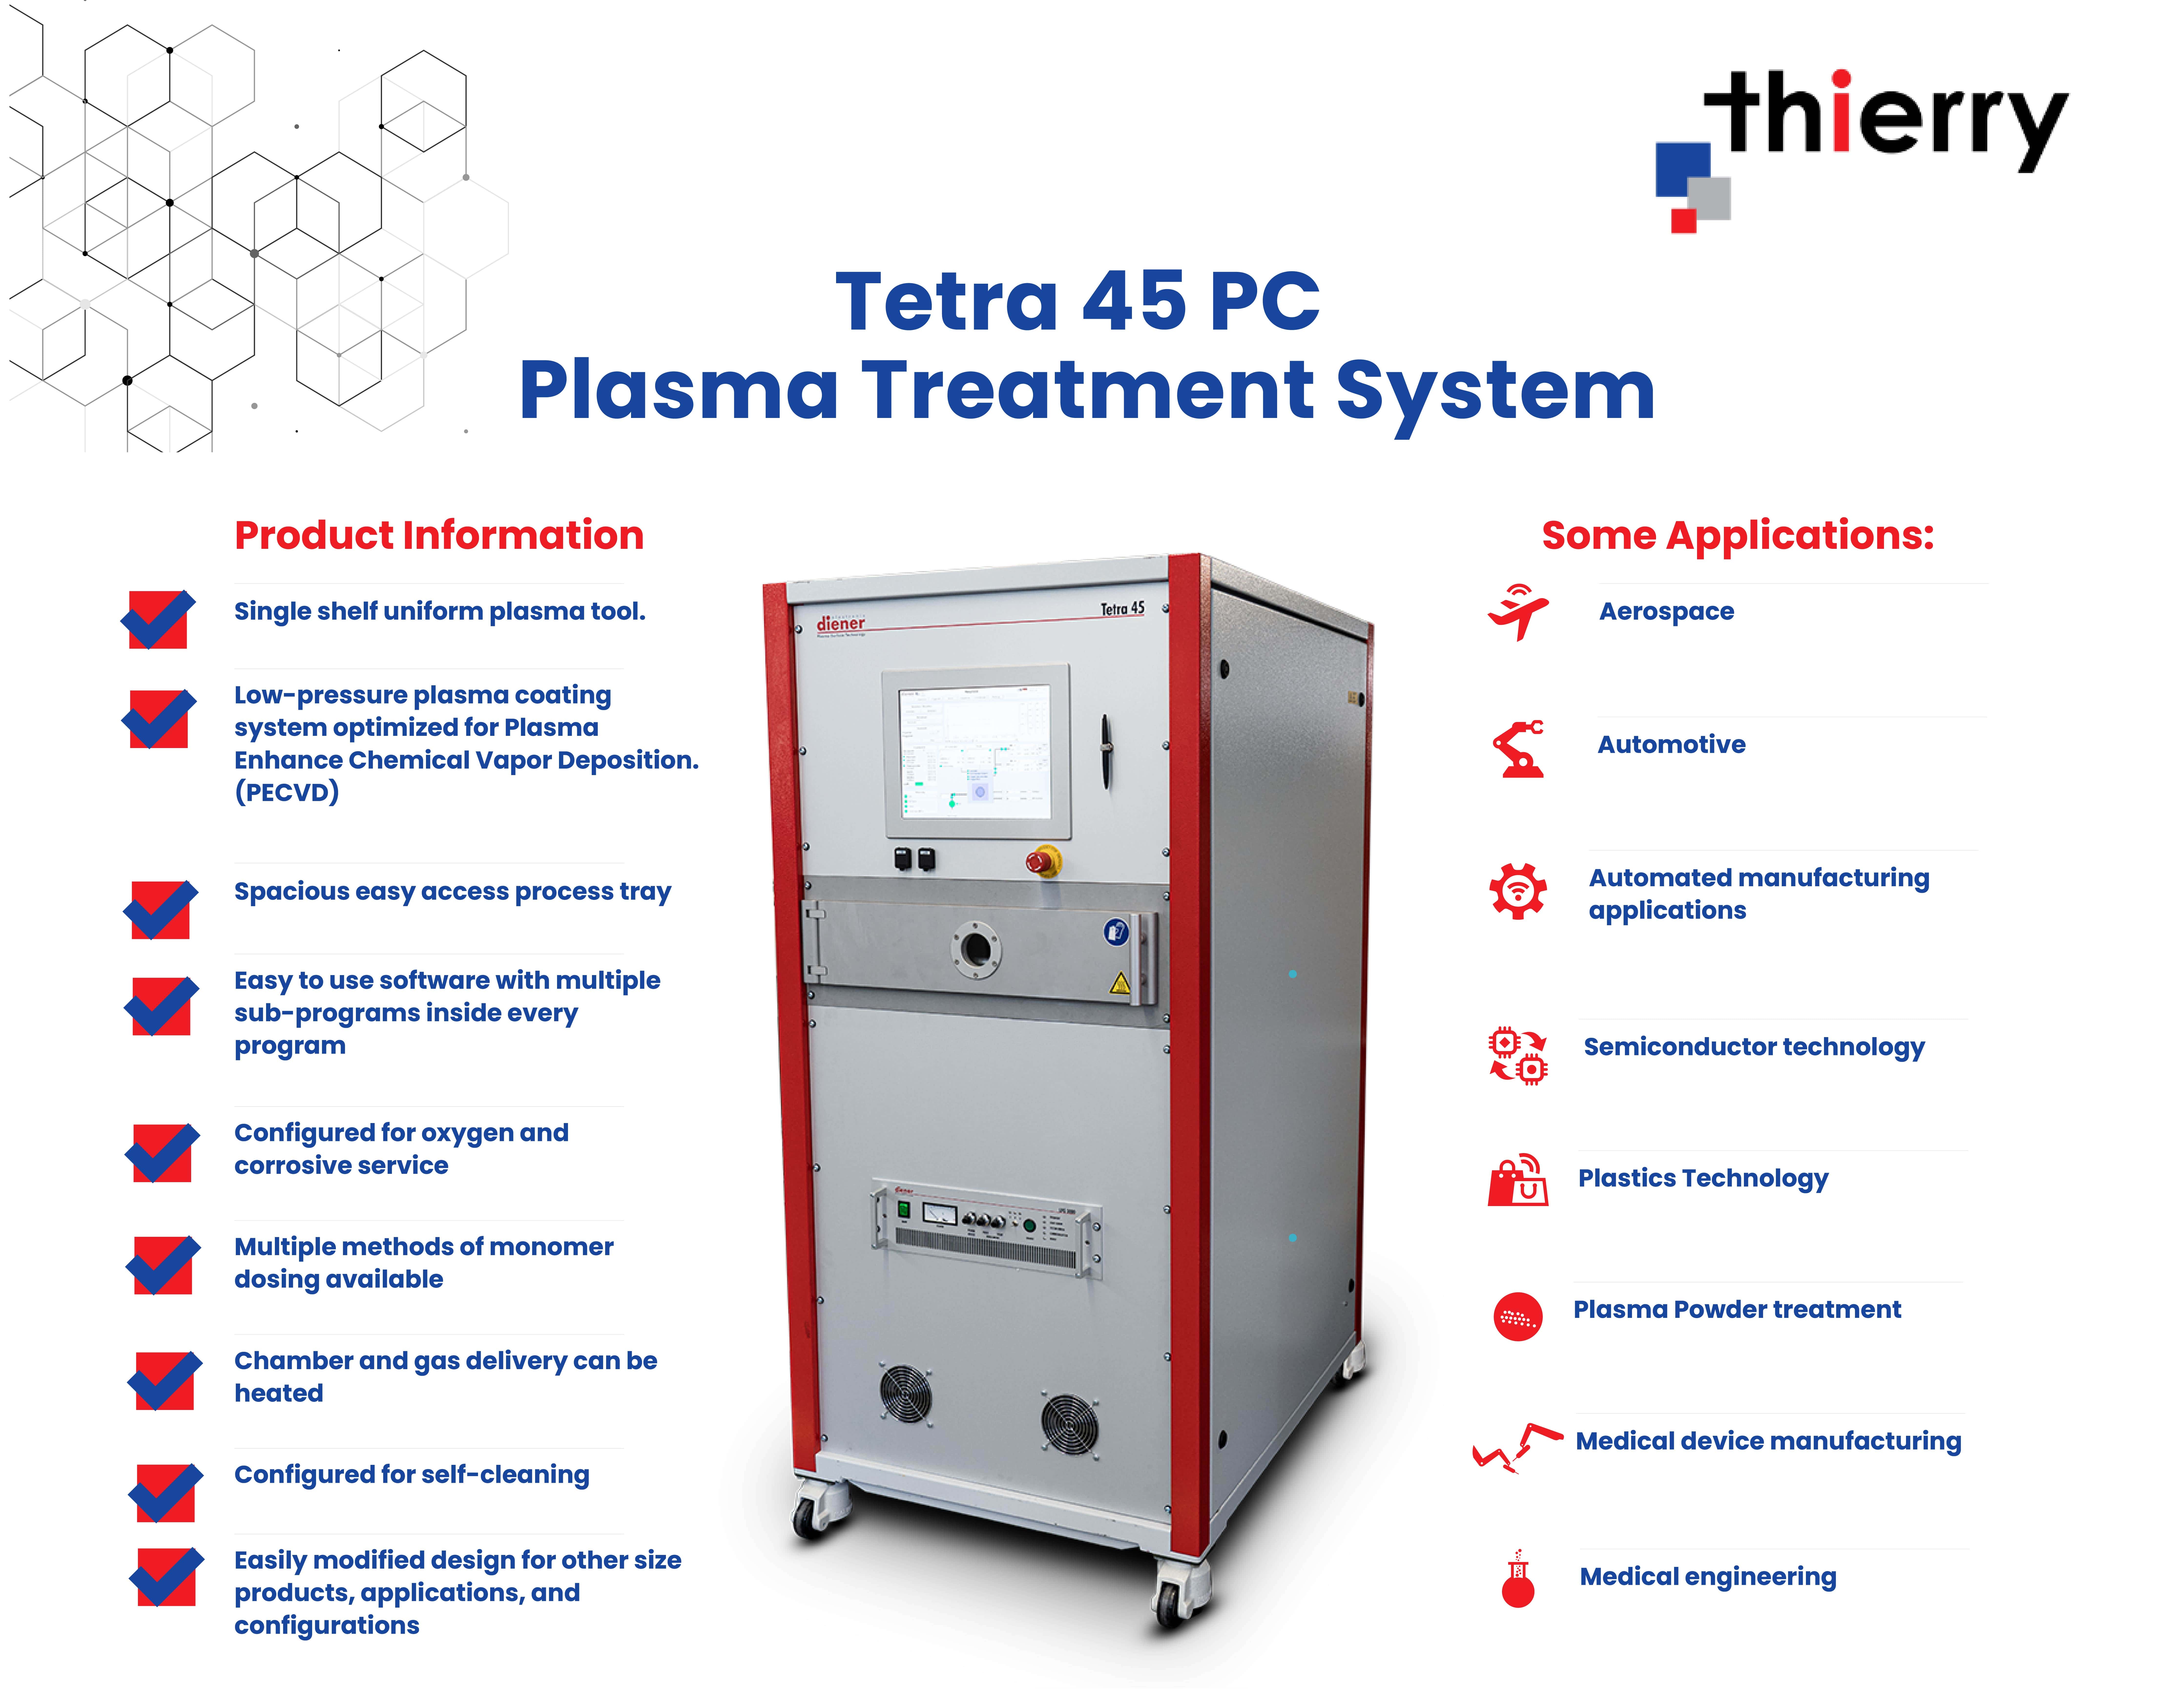 Thierry_Corp_Tetra_45_PC_Plasma_Treatment_System